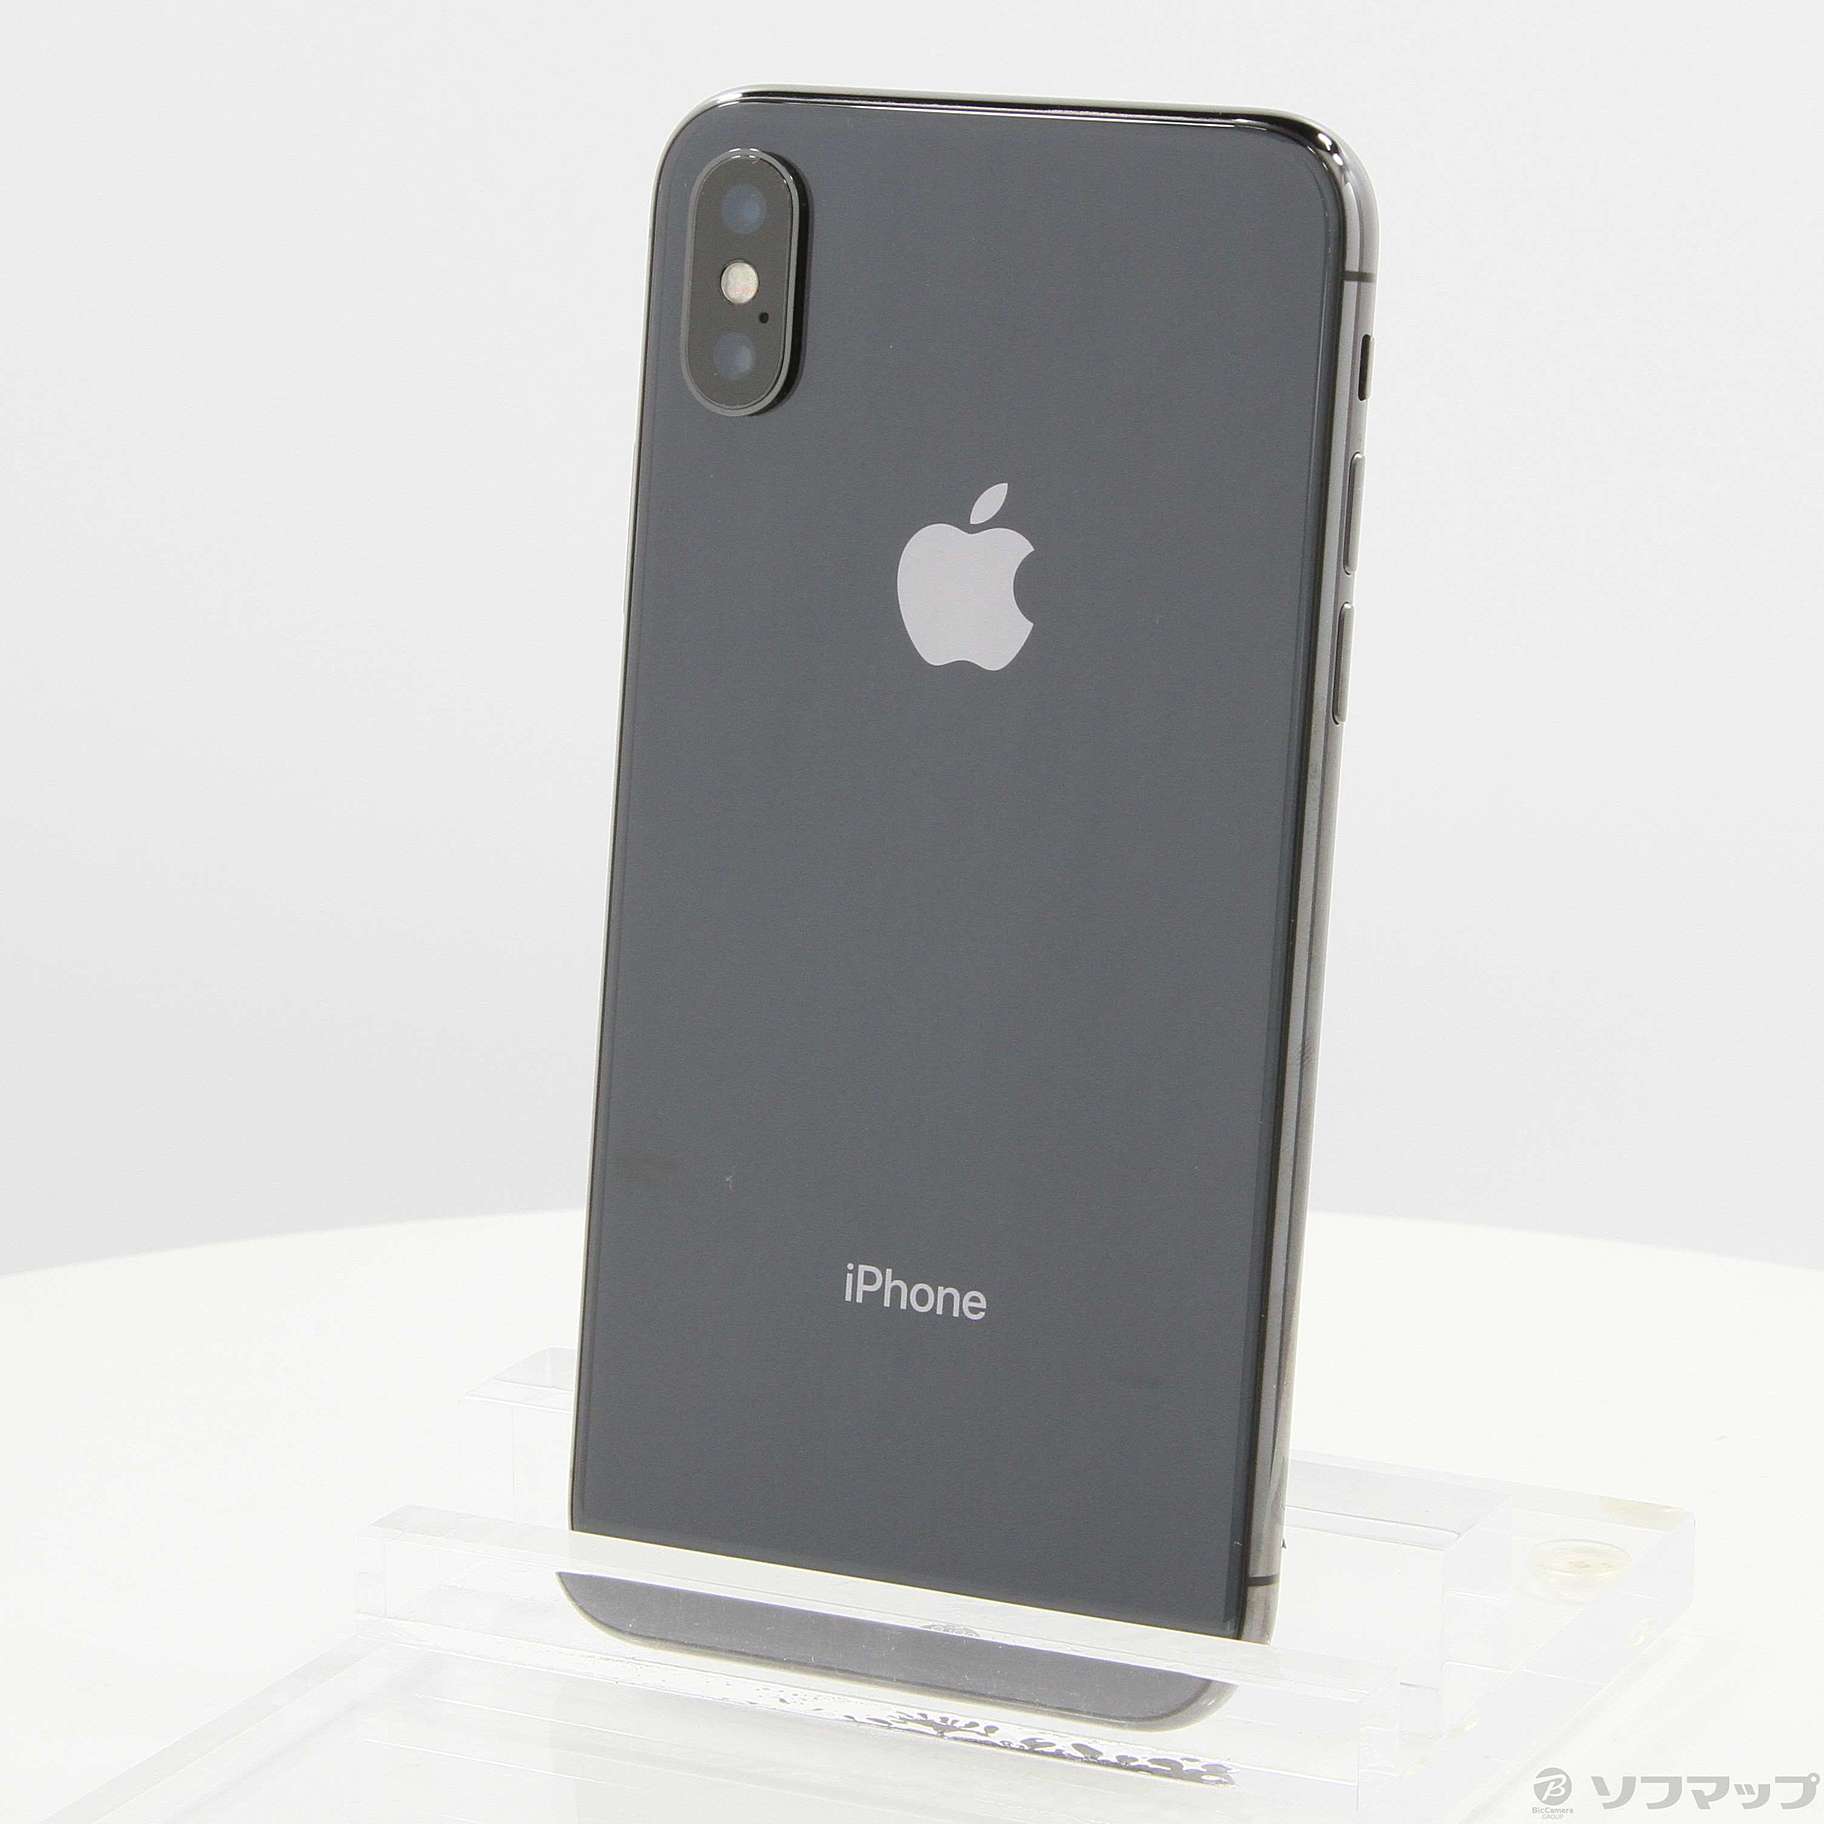 iPhoneXRカラーiPhone XR64G black sim free Applecare+付